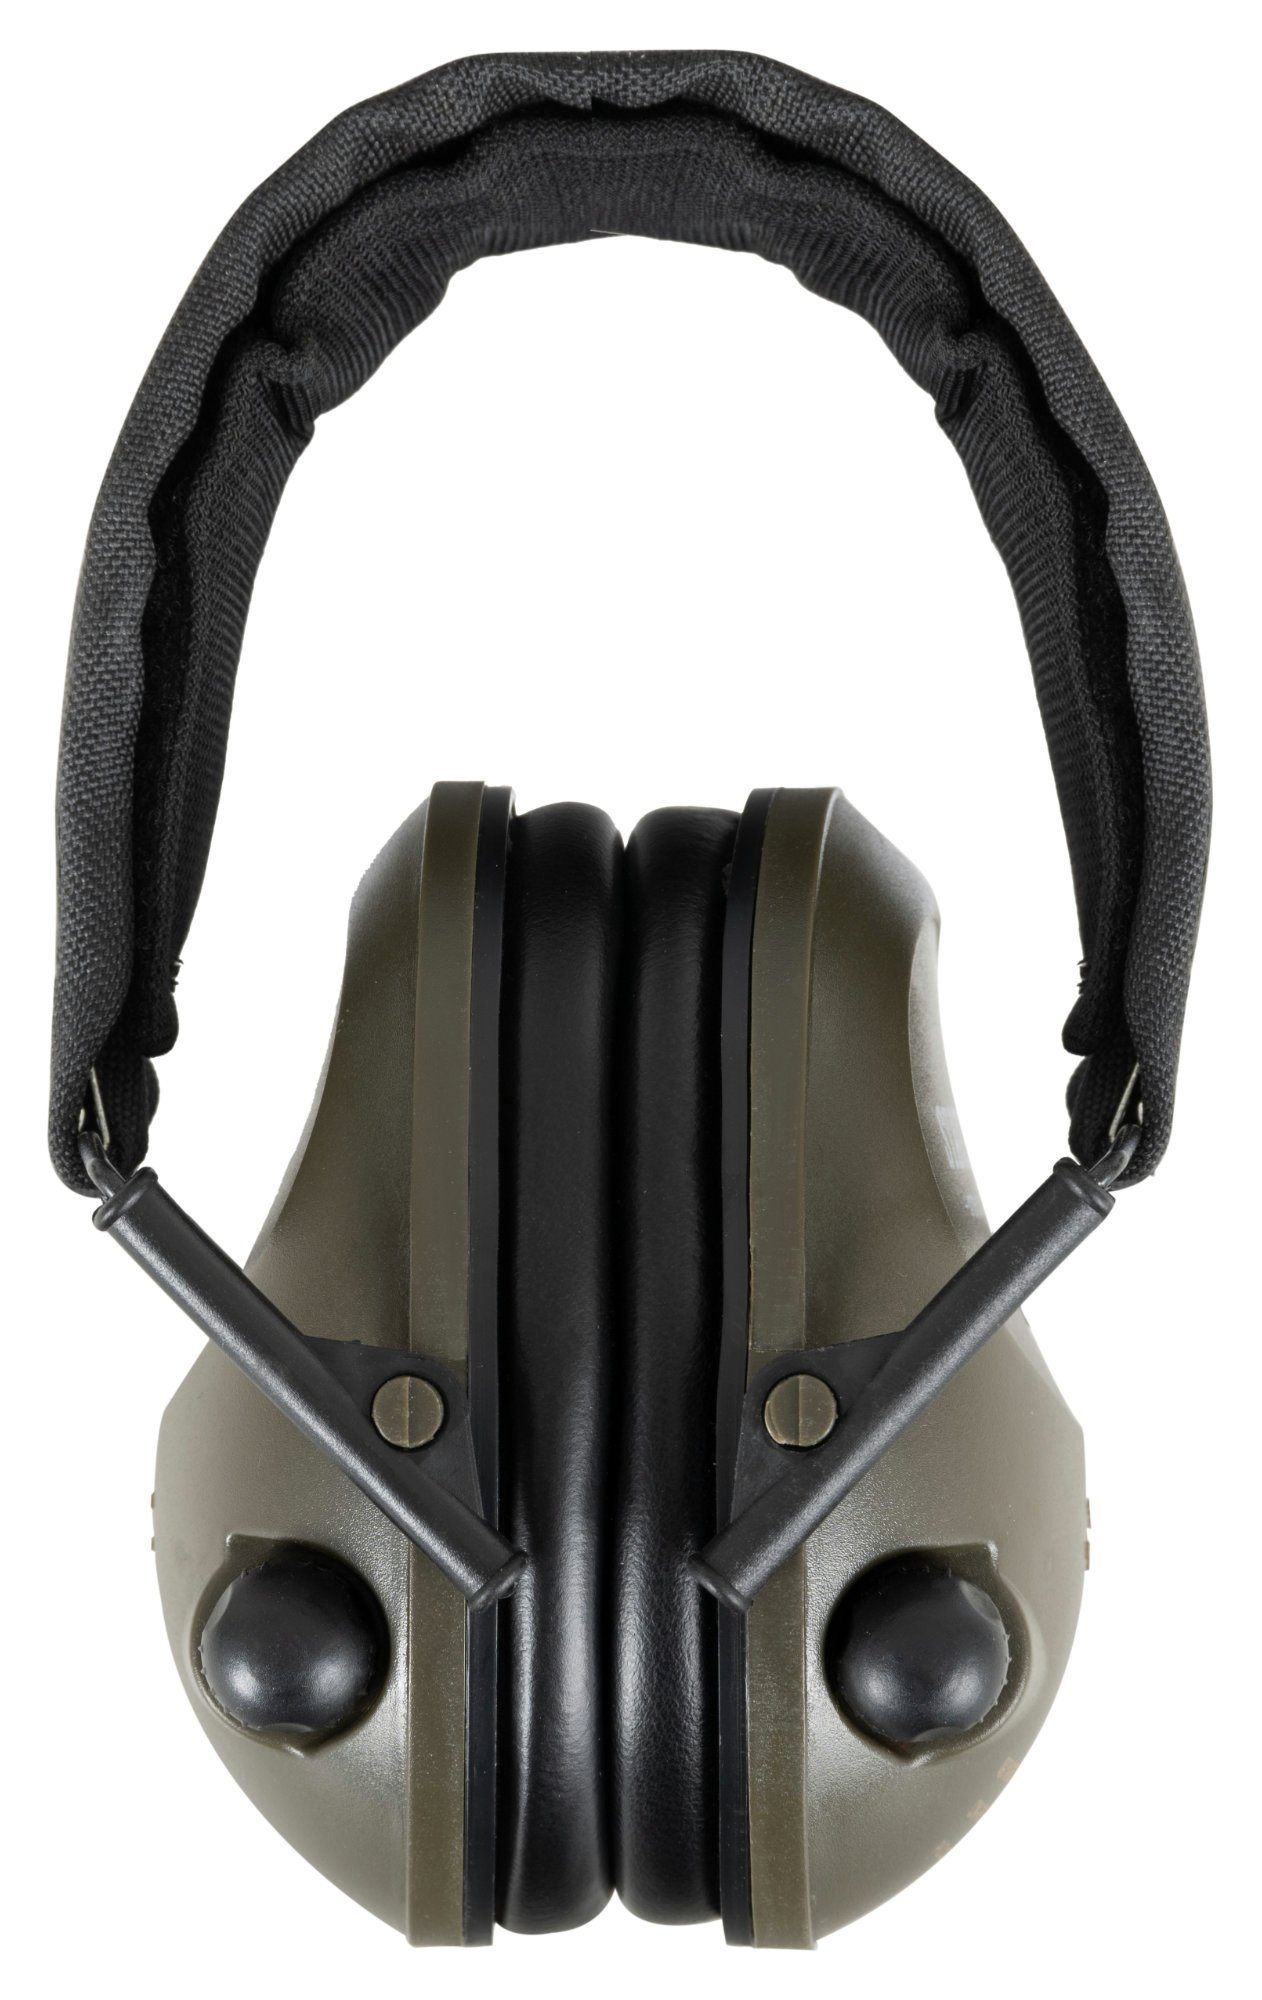 Größenverstellbar Bügelgehörschutz ContraNoise mit Gehörschutz “Active-Volume-System”, Stagecaptain Kopfhörer